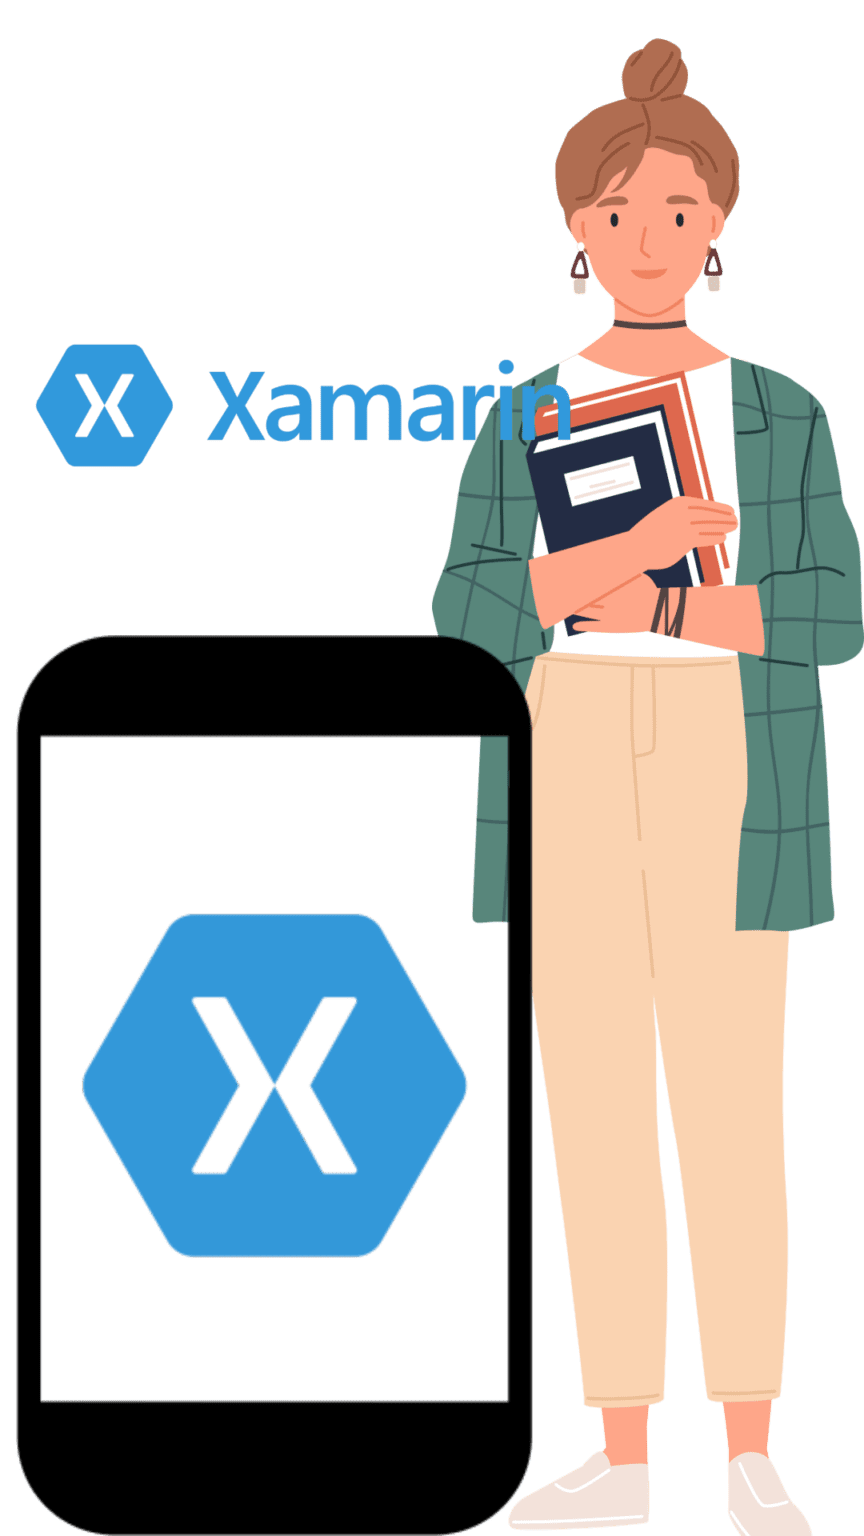 Xamarin Mobile App Development Company In India, Xamarin App Development Services India, Hire Xamerin App Developers India